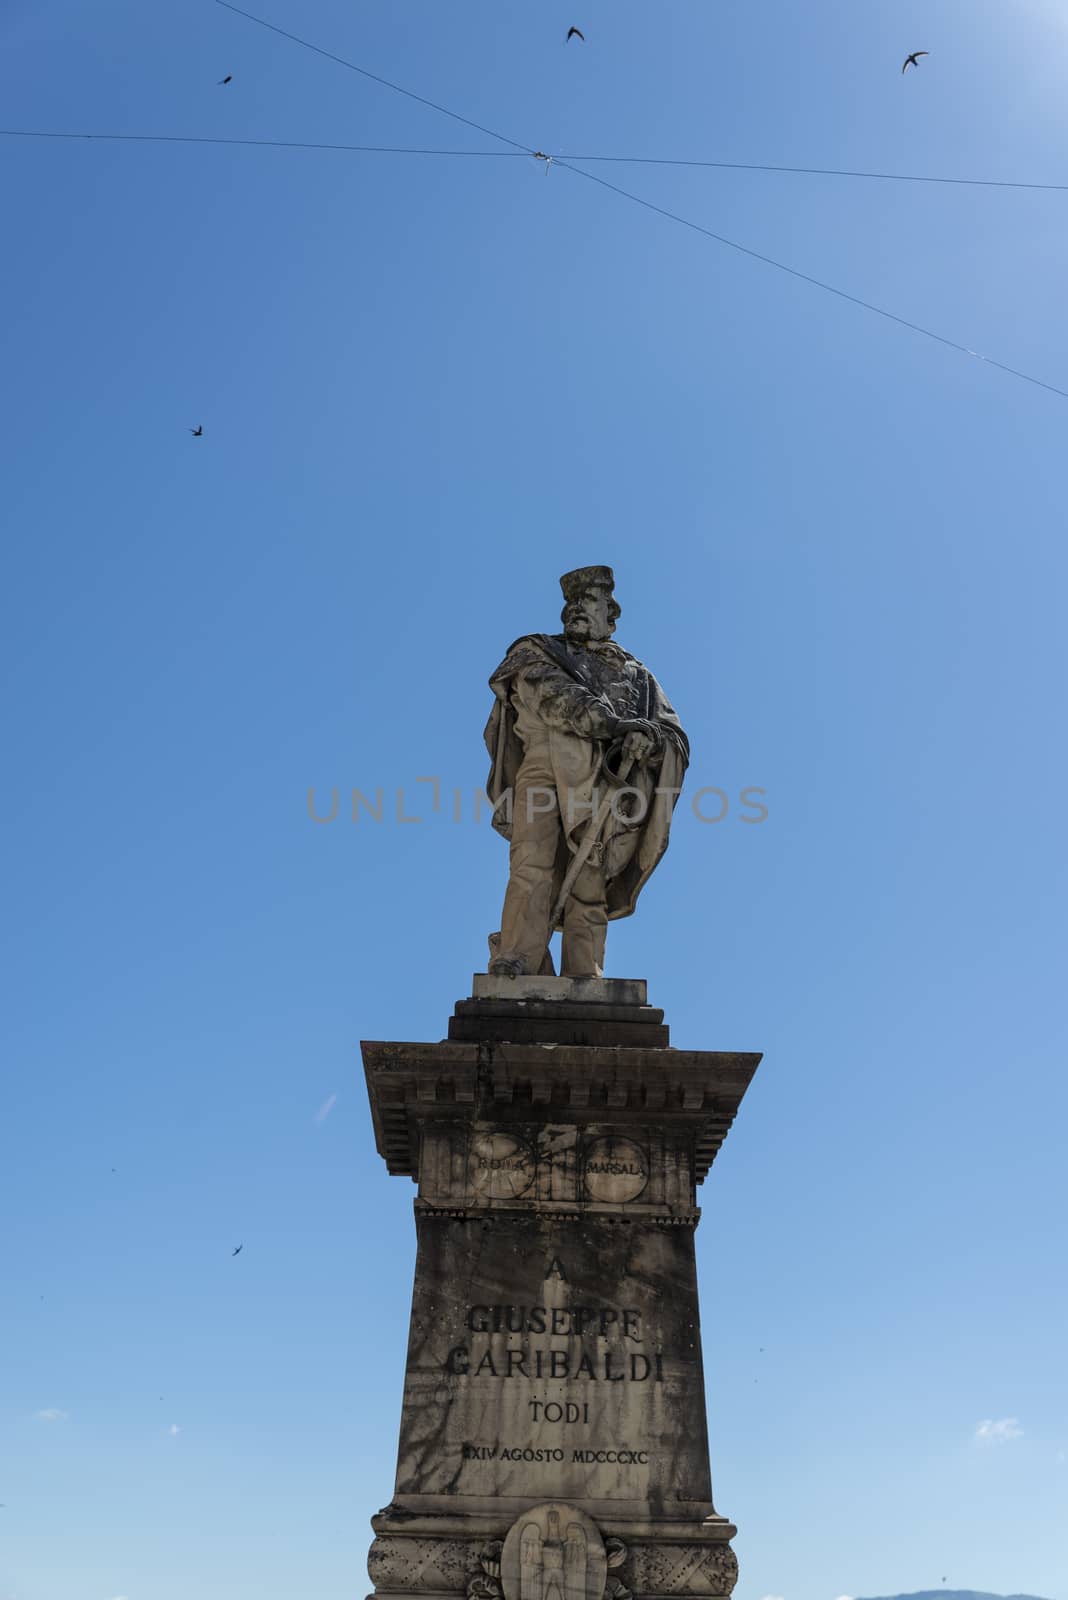 Garibaldi monument in Todi square by carfedeph